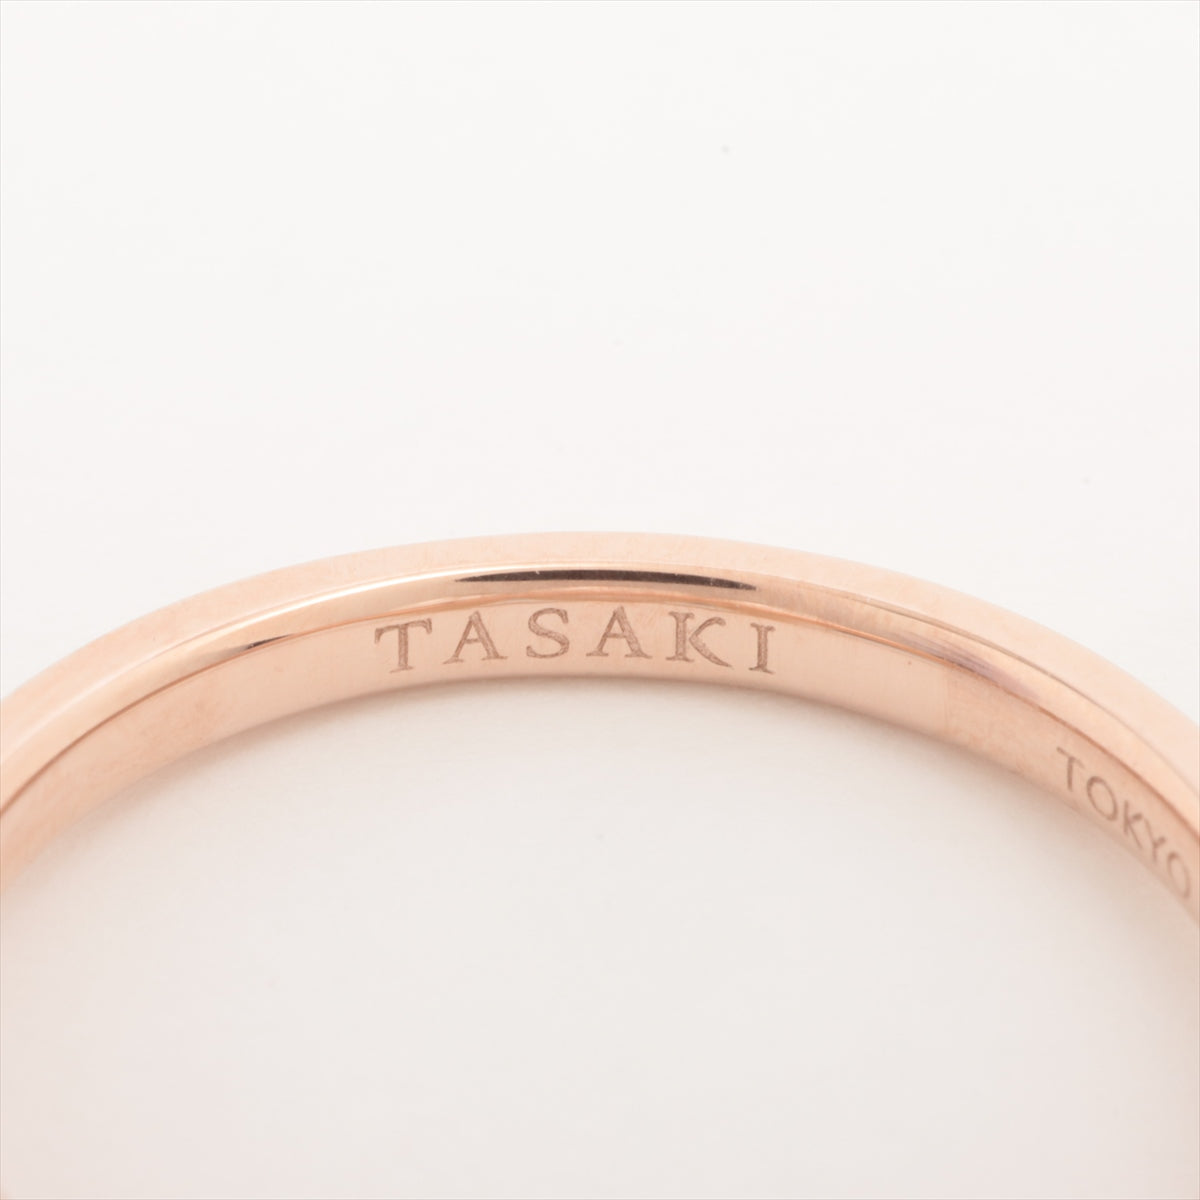 TASAKI Balance Era Pearl rings 750(PG) 5.7g Approx. 8.0mm